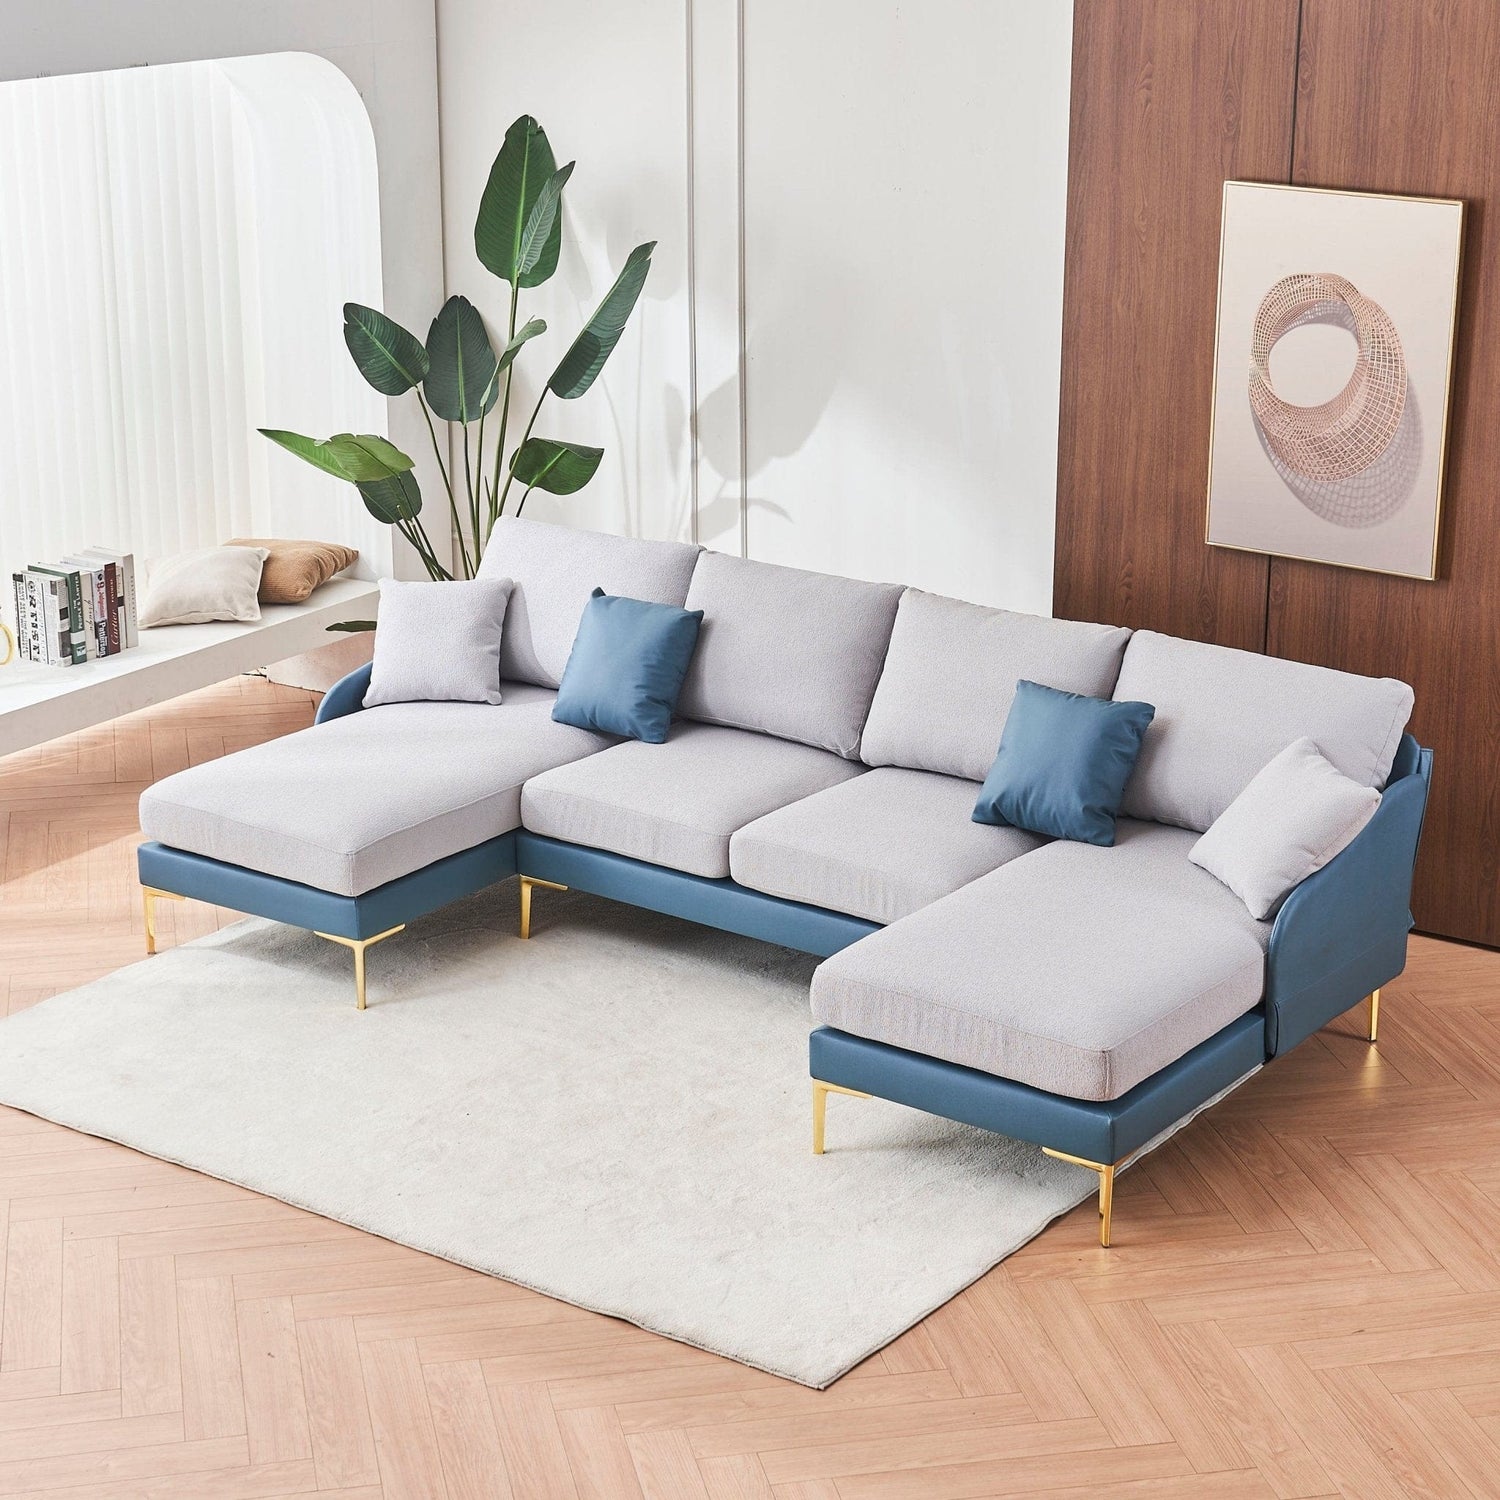 blue-grey-sectional-sofa